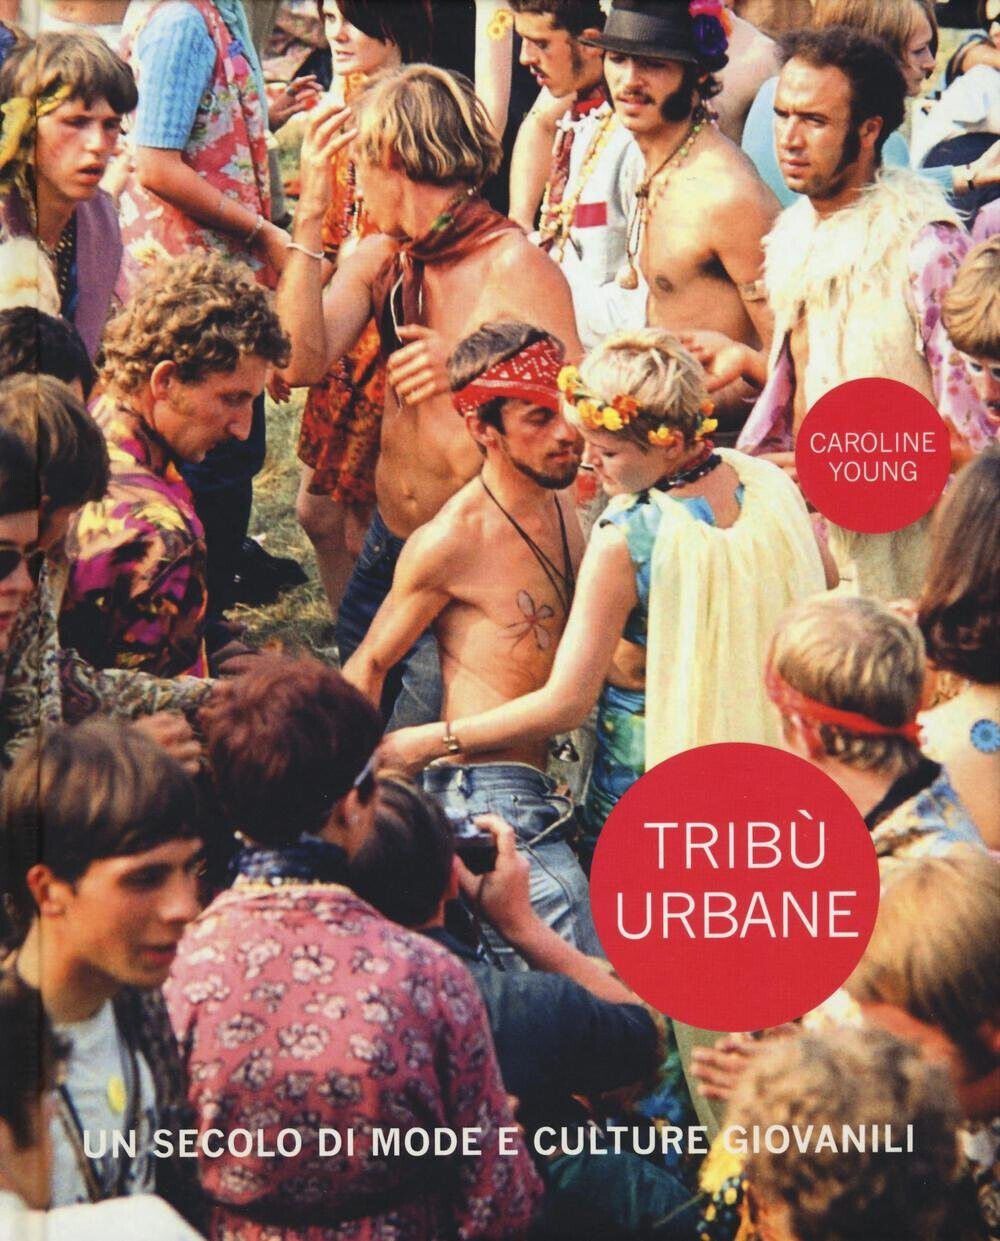 Trib? urbane - Caroline Young - Atlante, 2016